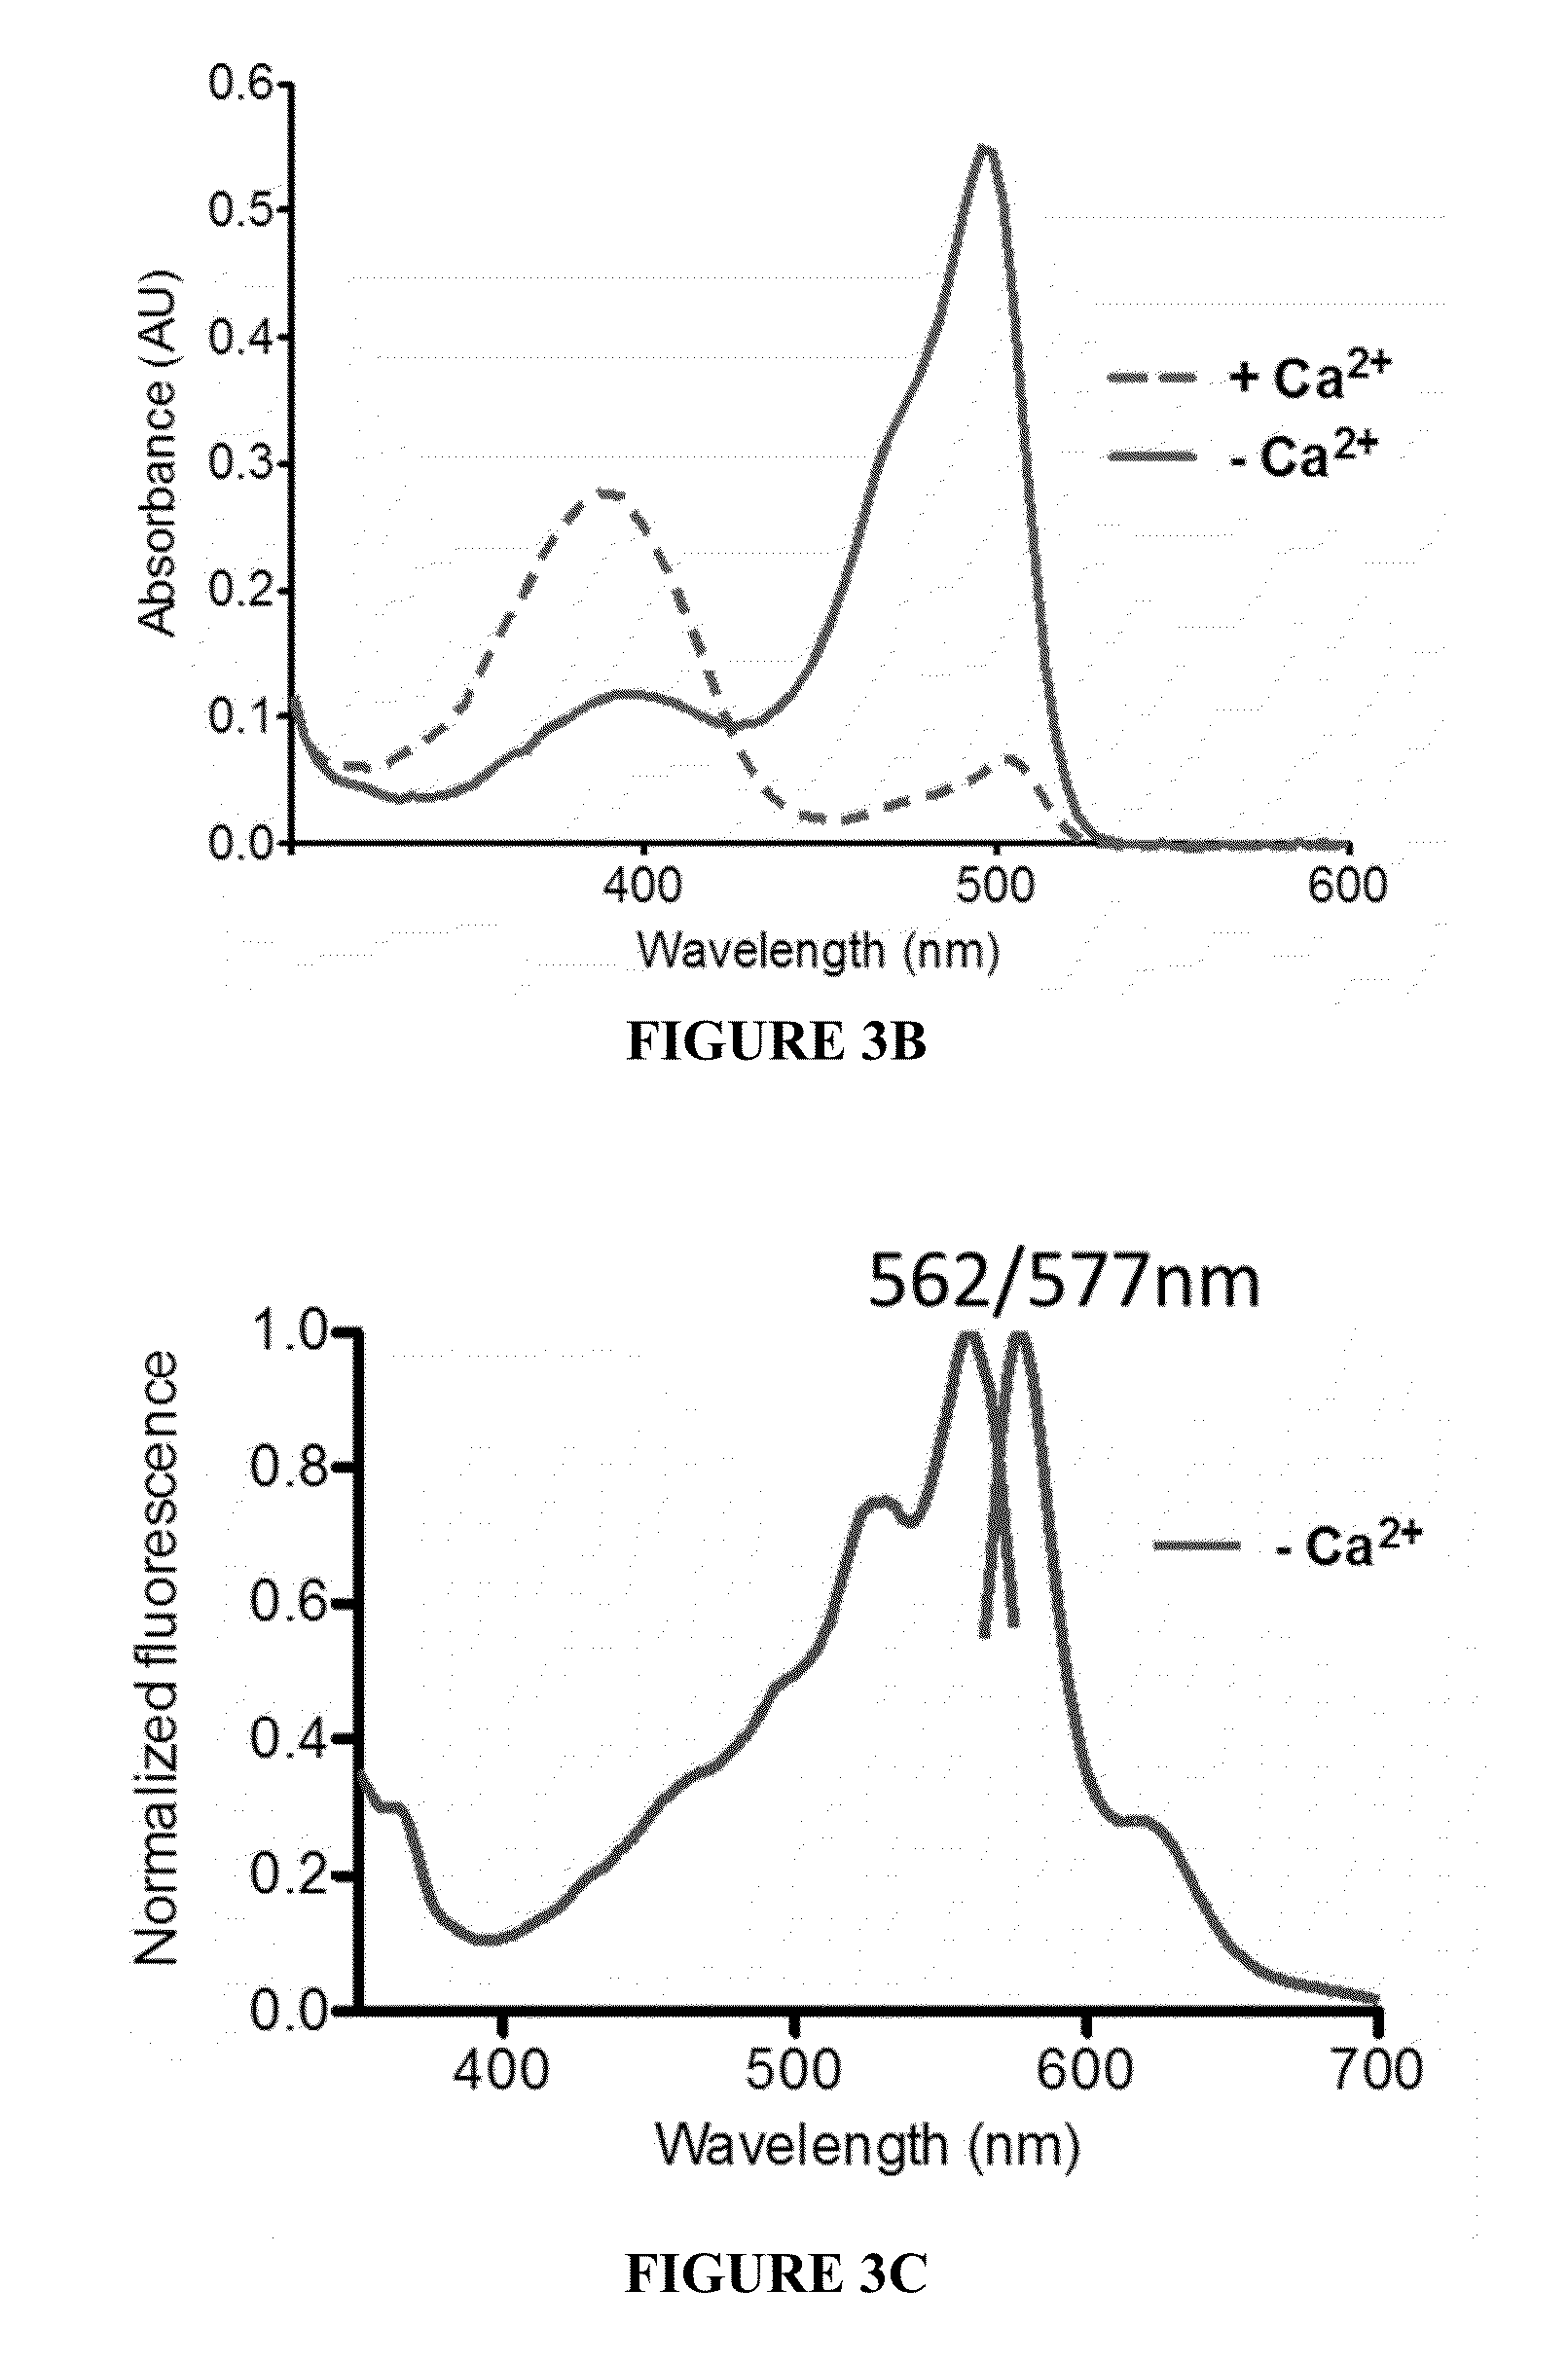 Fluorescent protein-based indicators